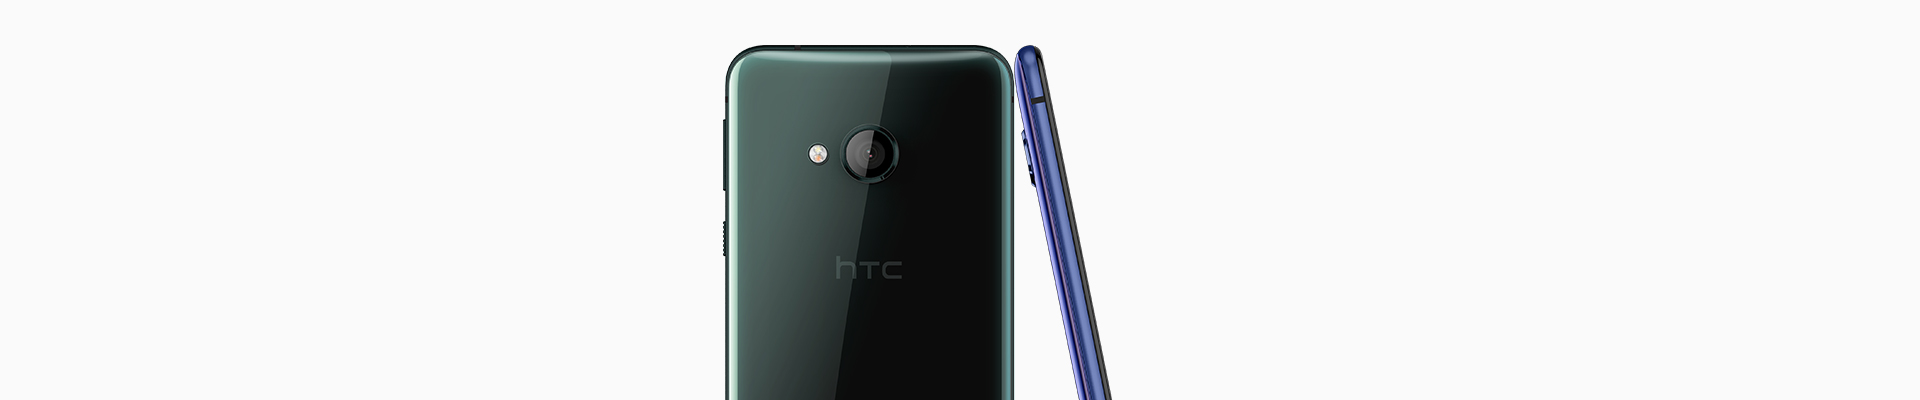 Снижение цены на HTC U Play